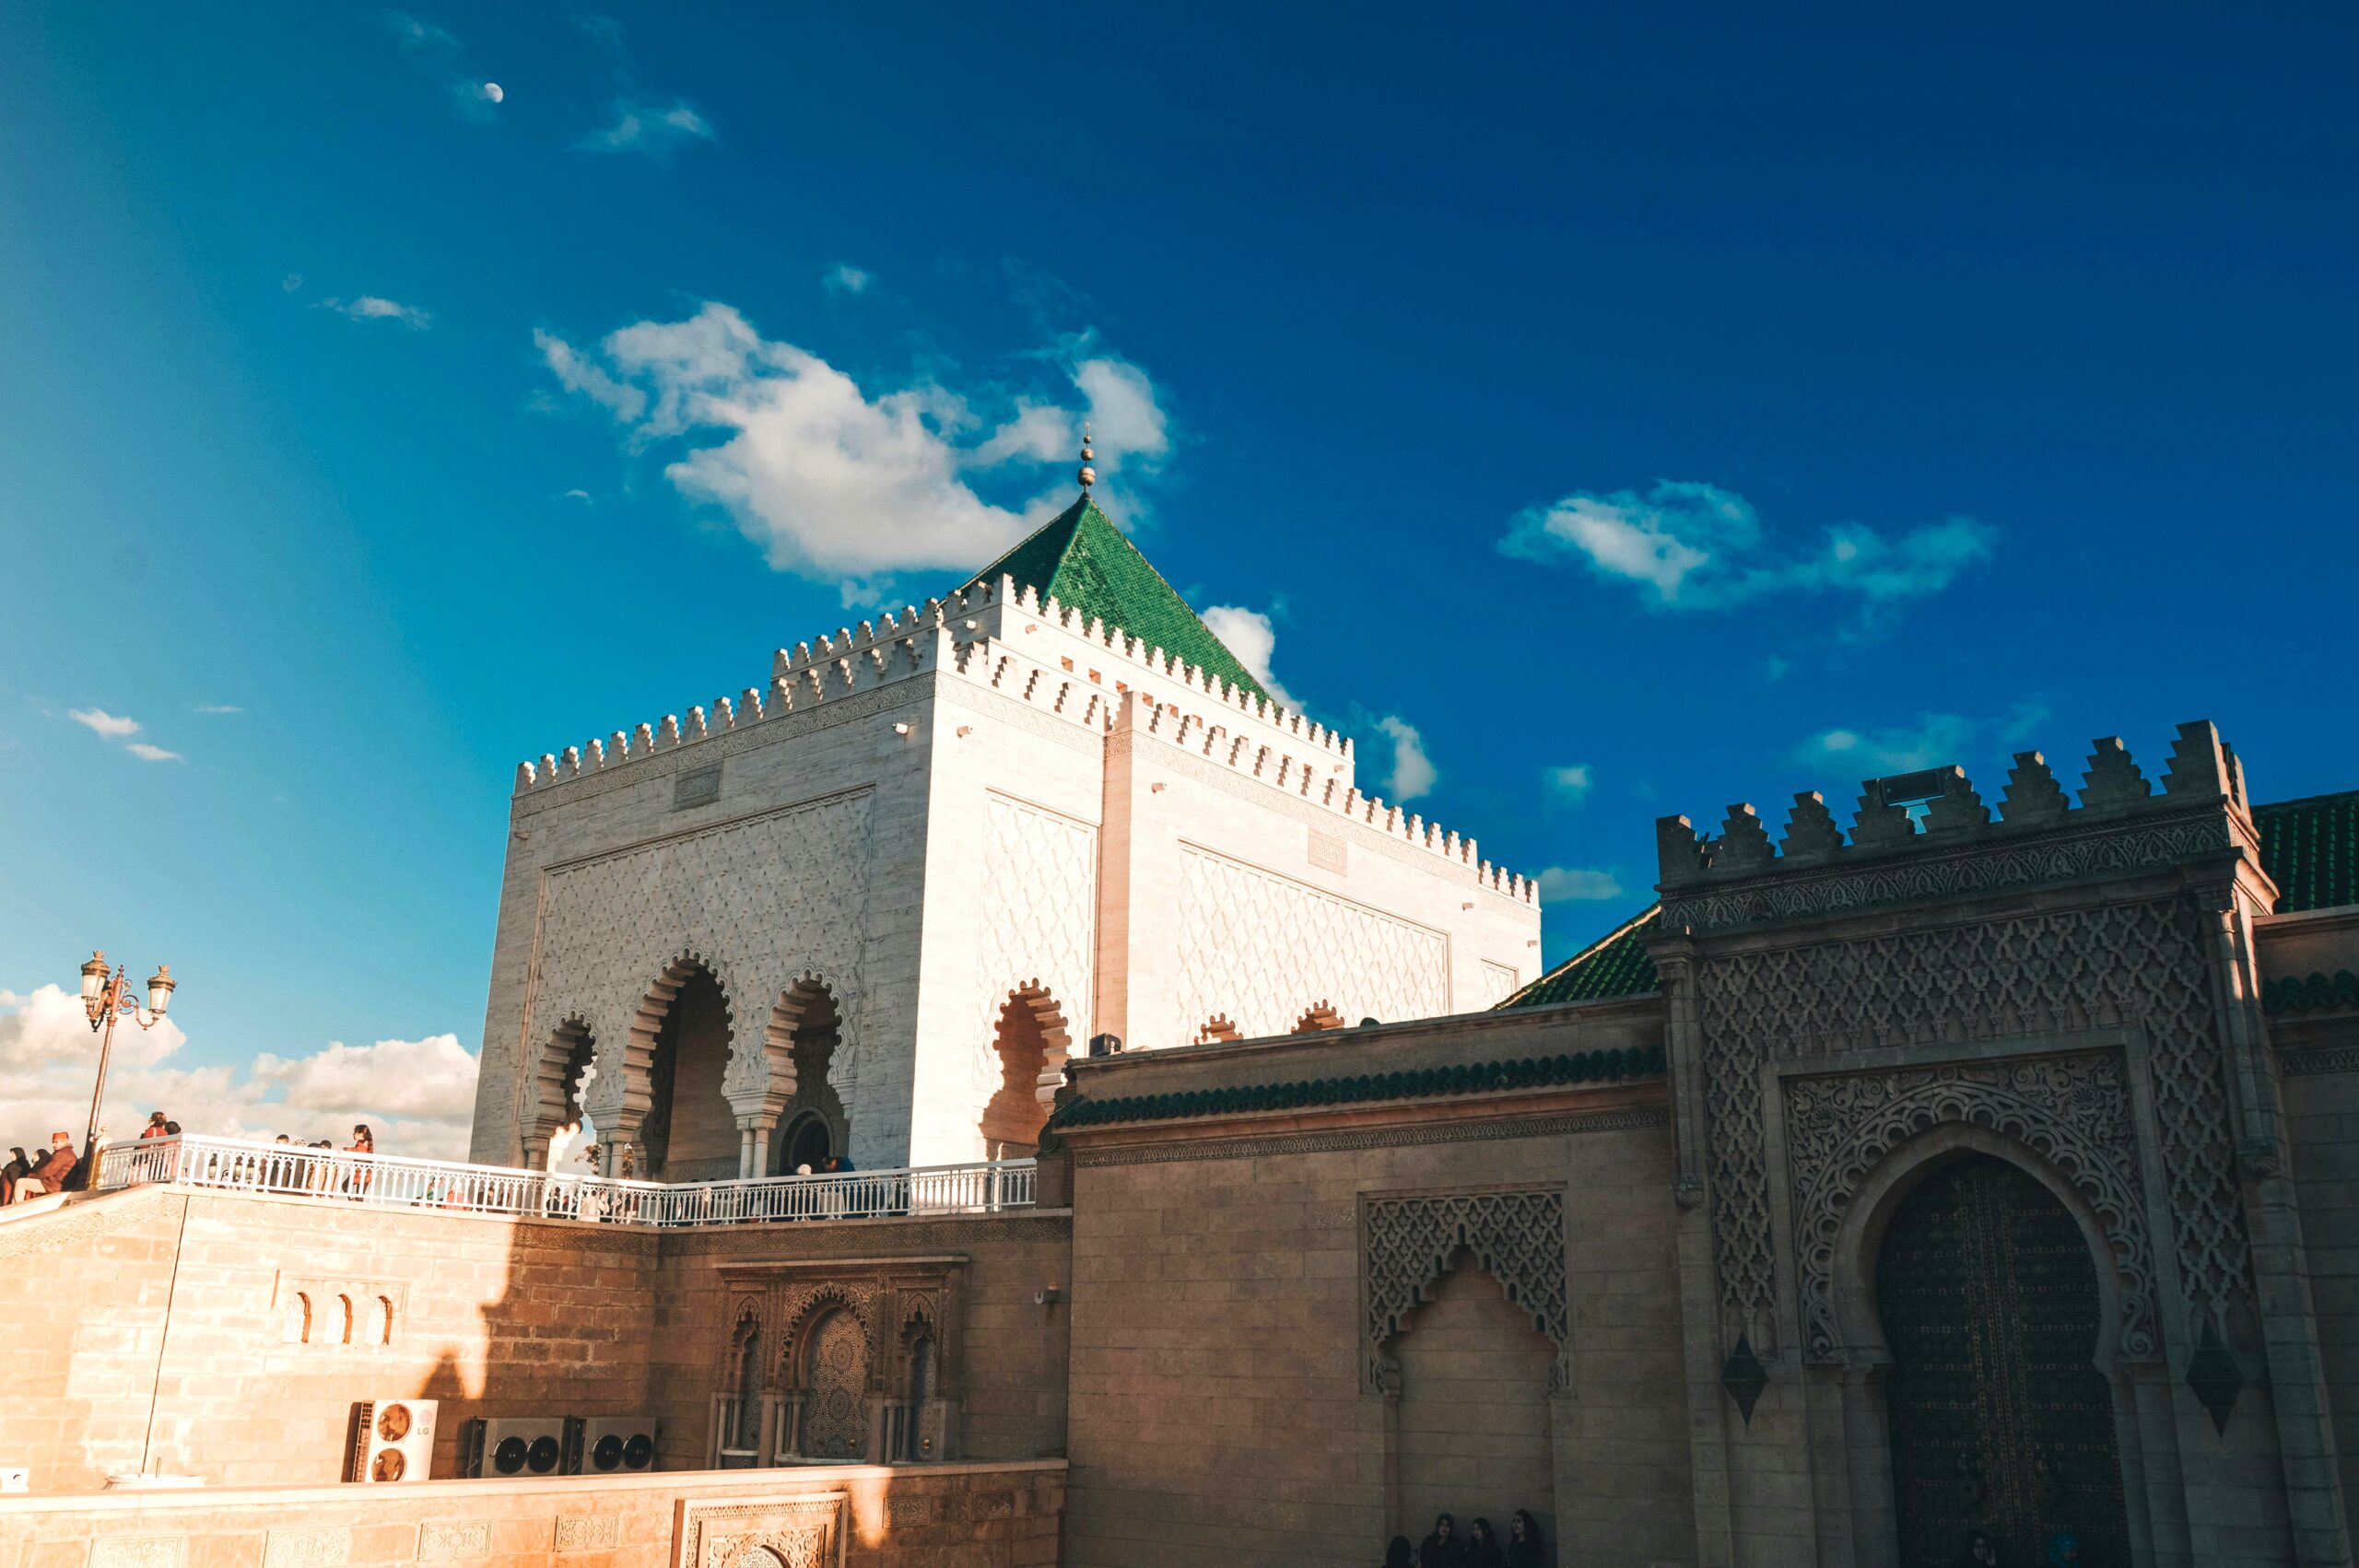 Rabat, the Modern Capital & Historic City of the Kingdom